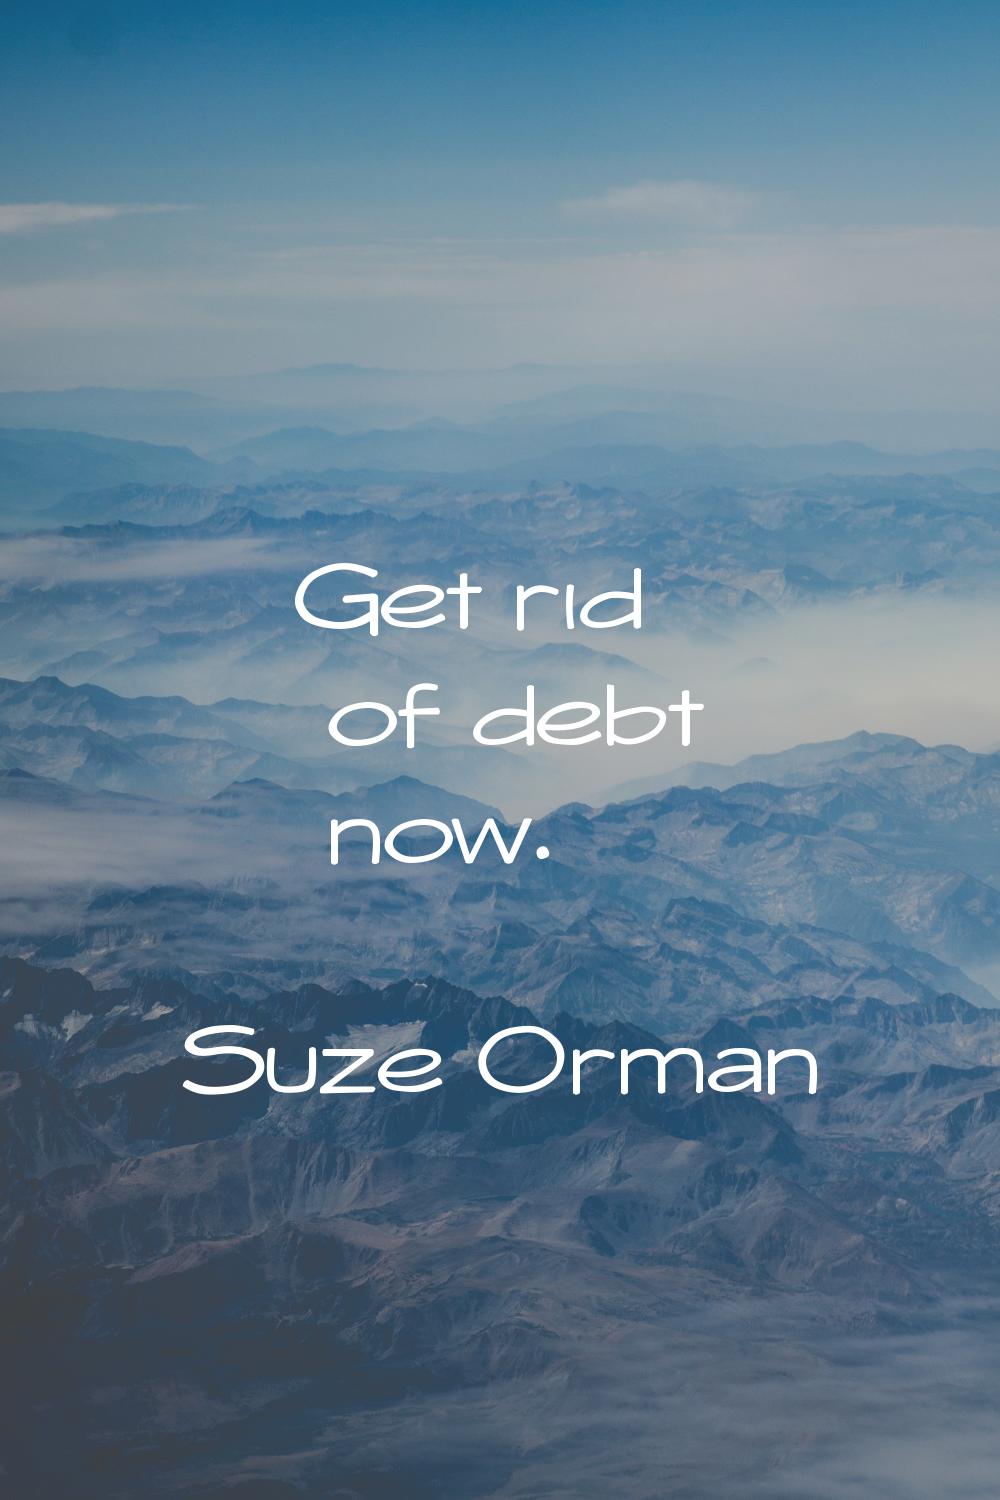 Get rid of debt now.